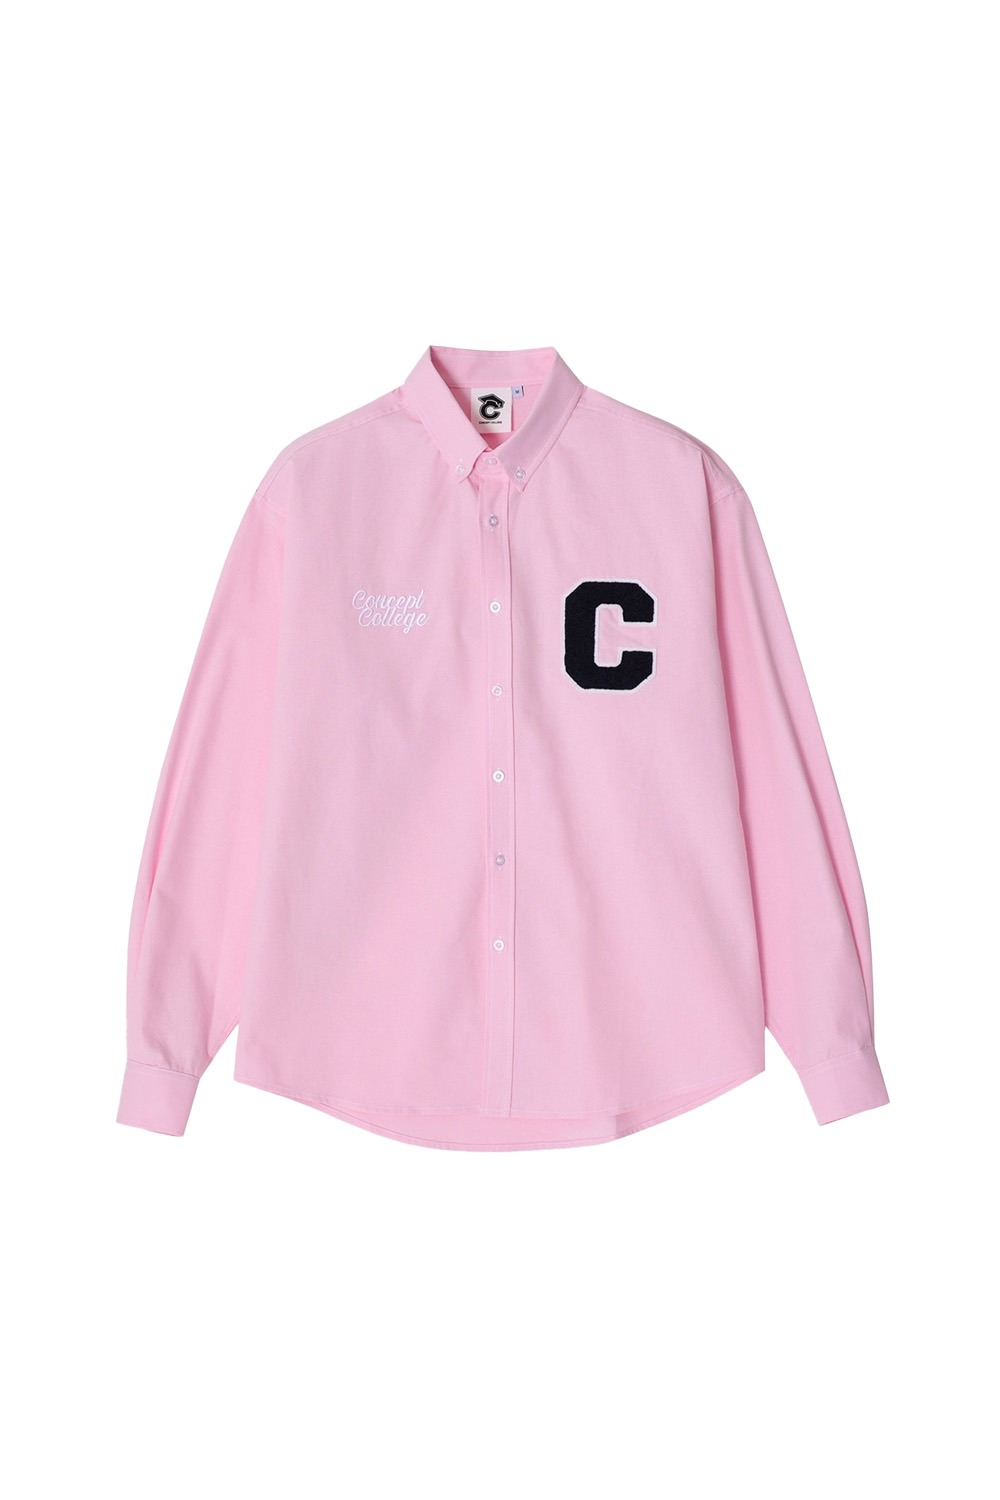 C 패치 옥스퍼드 셔츠 (핑크) - 리치즈 RICHEZ